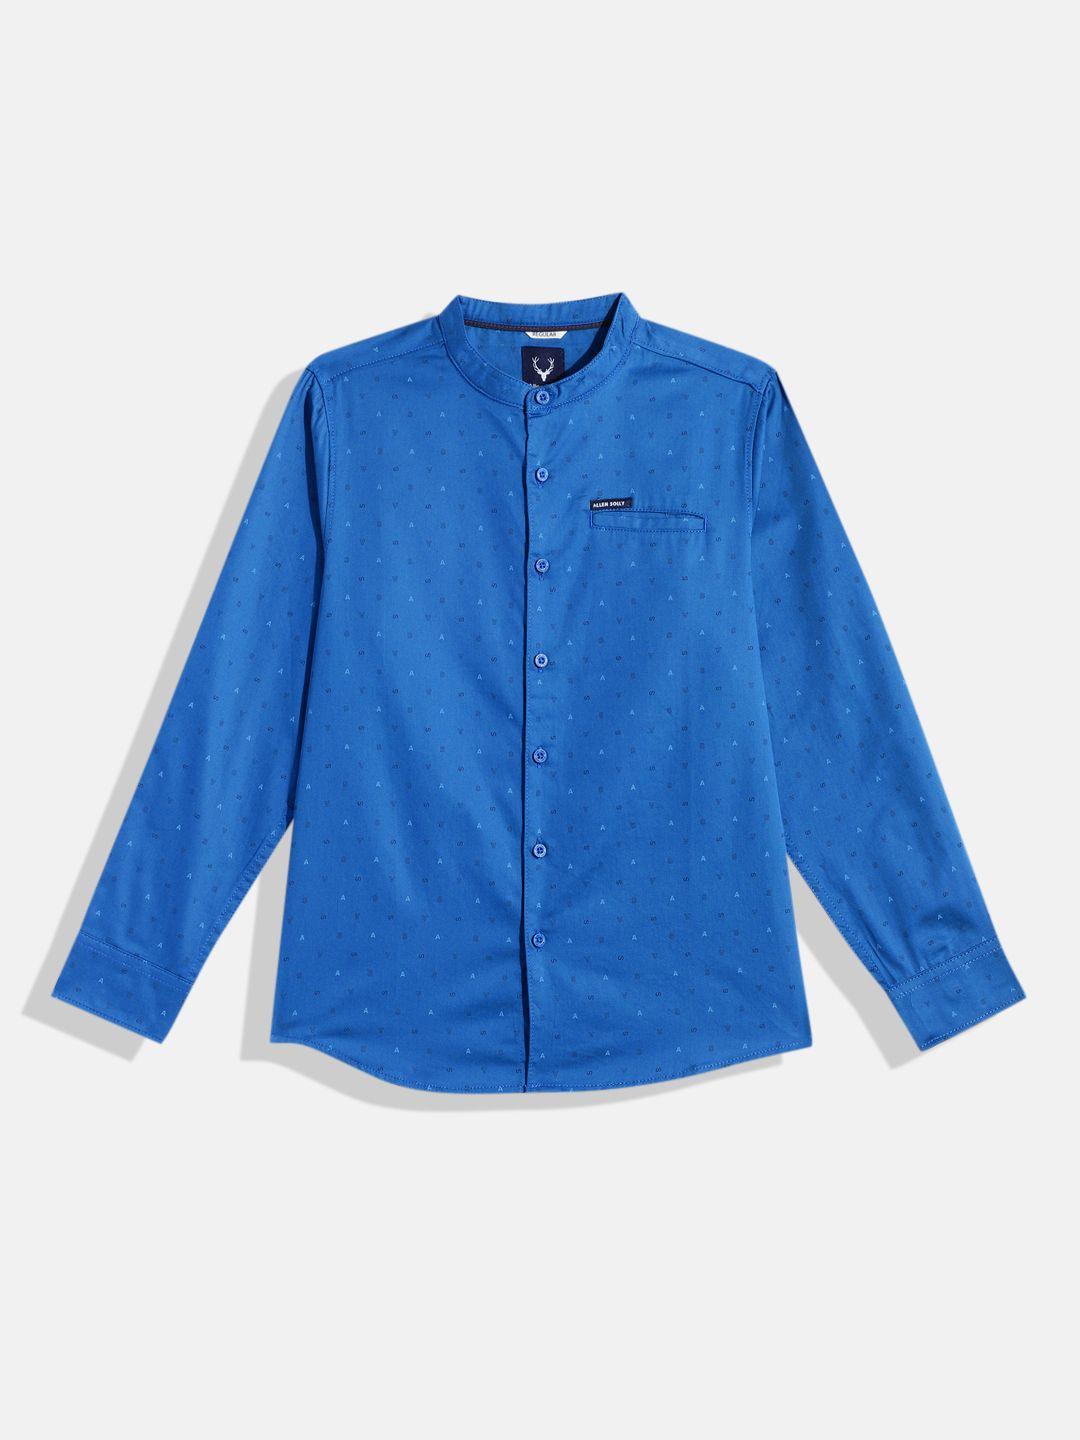 allen solly junior boys micro ditsy brand logo opaque printed pure cotton casual shirt